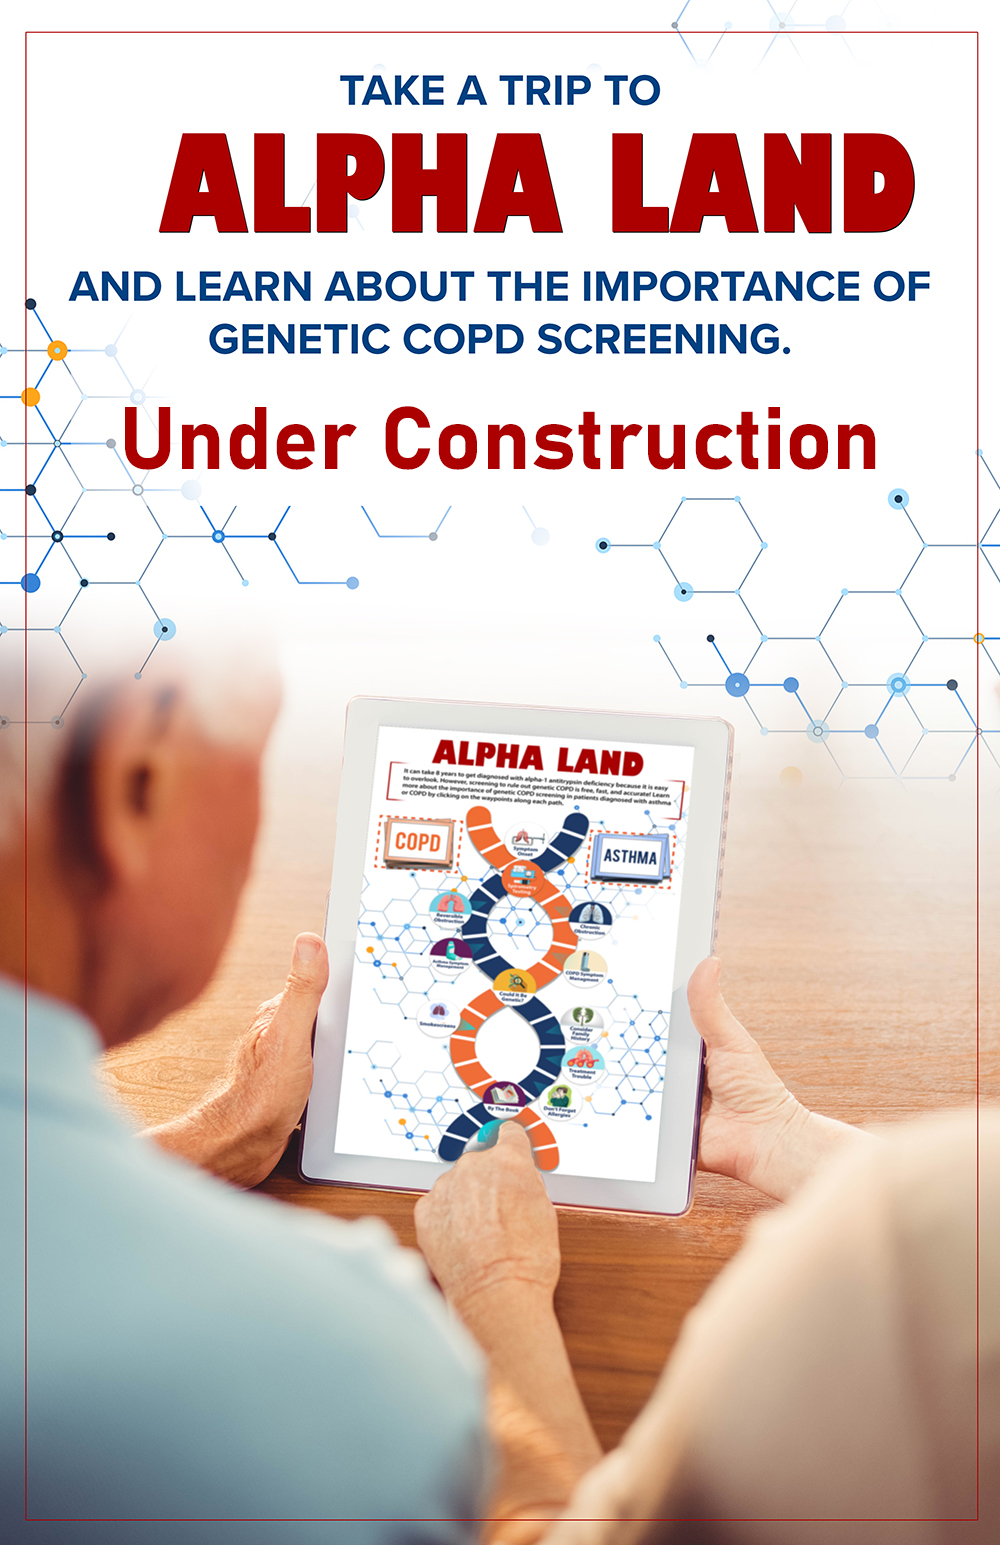 Alphaland Genetic Screening COPD